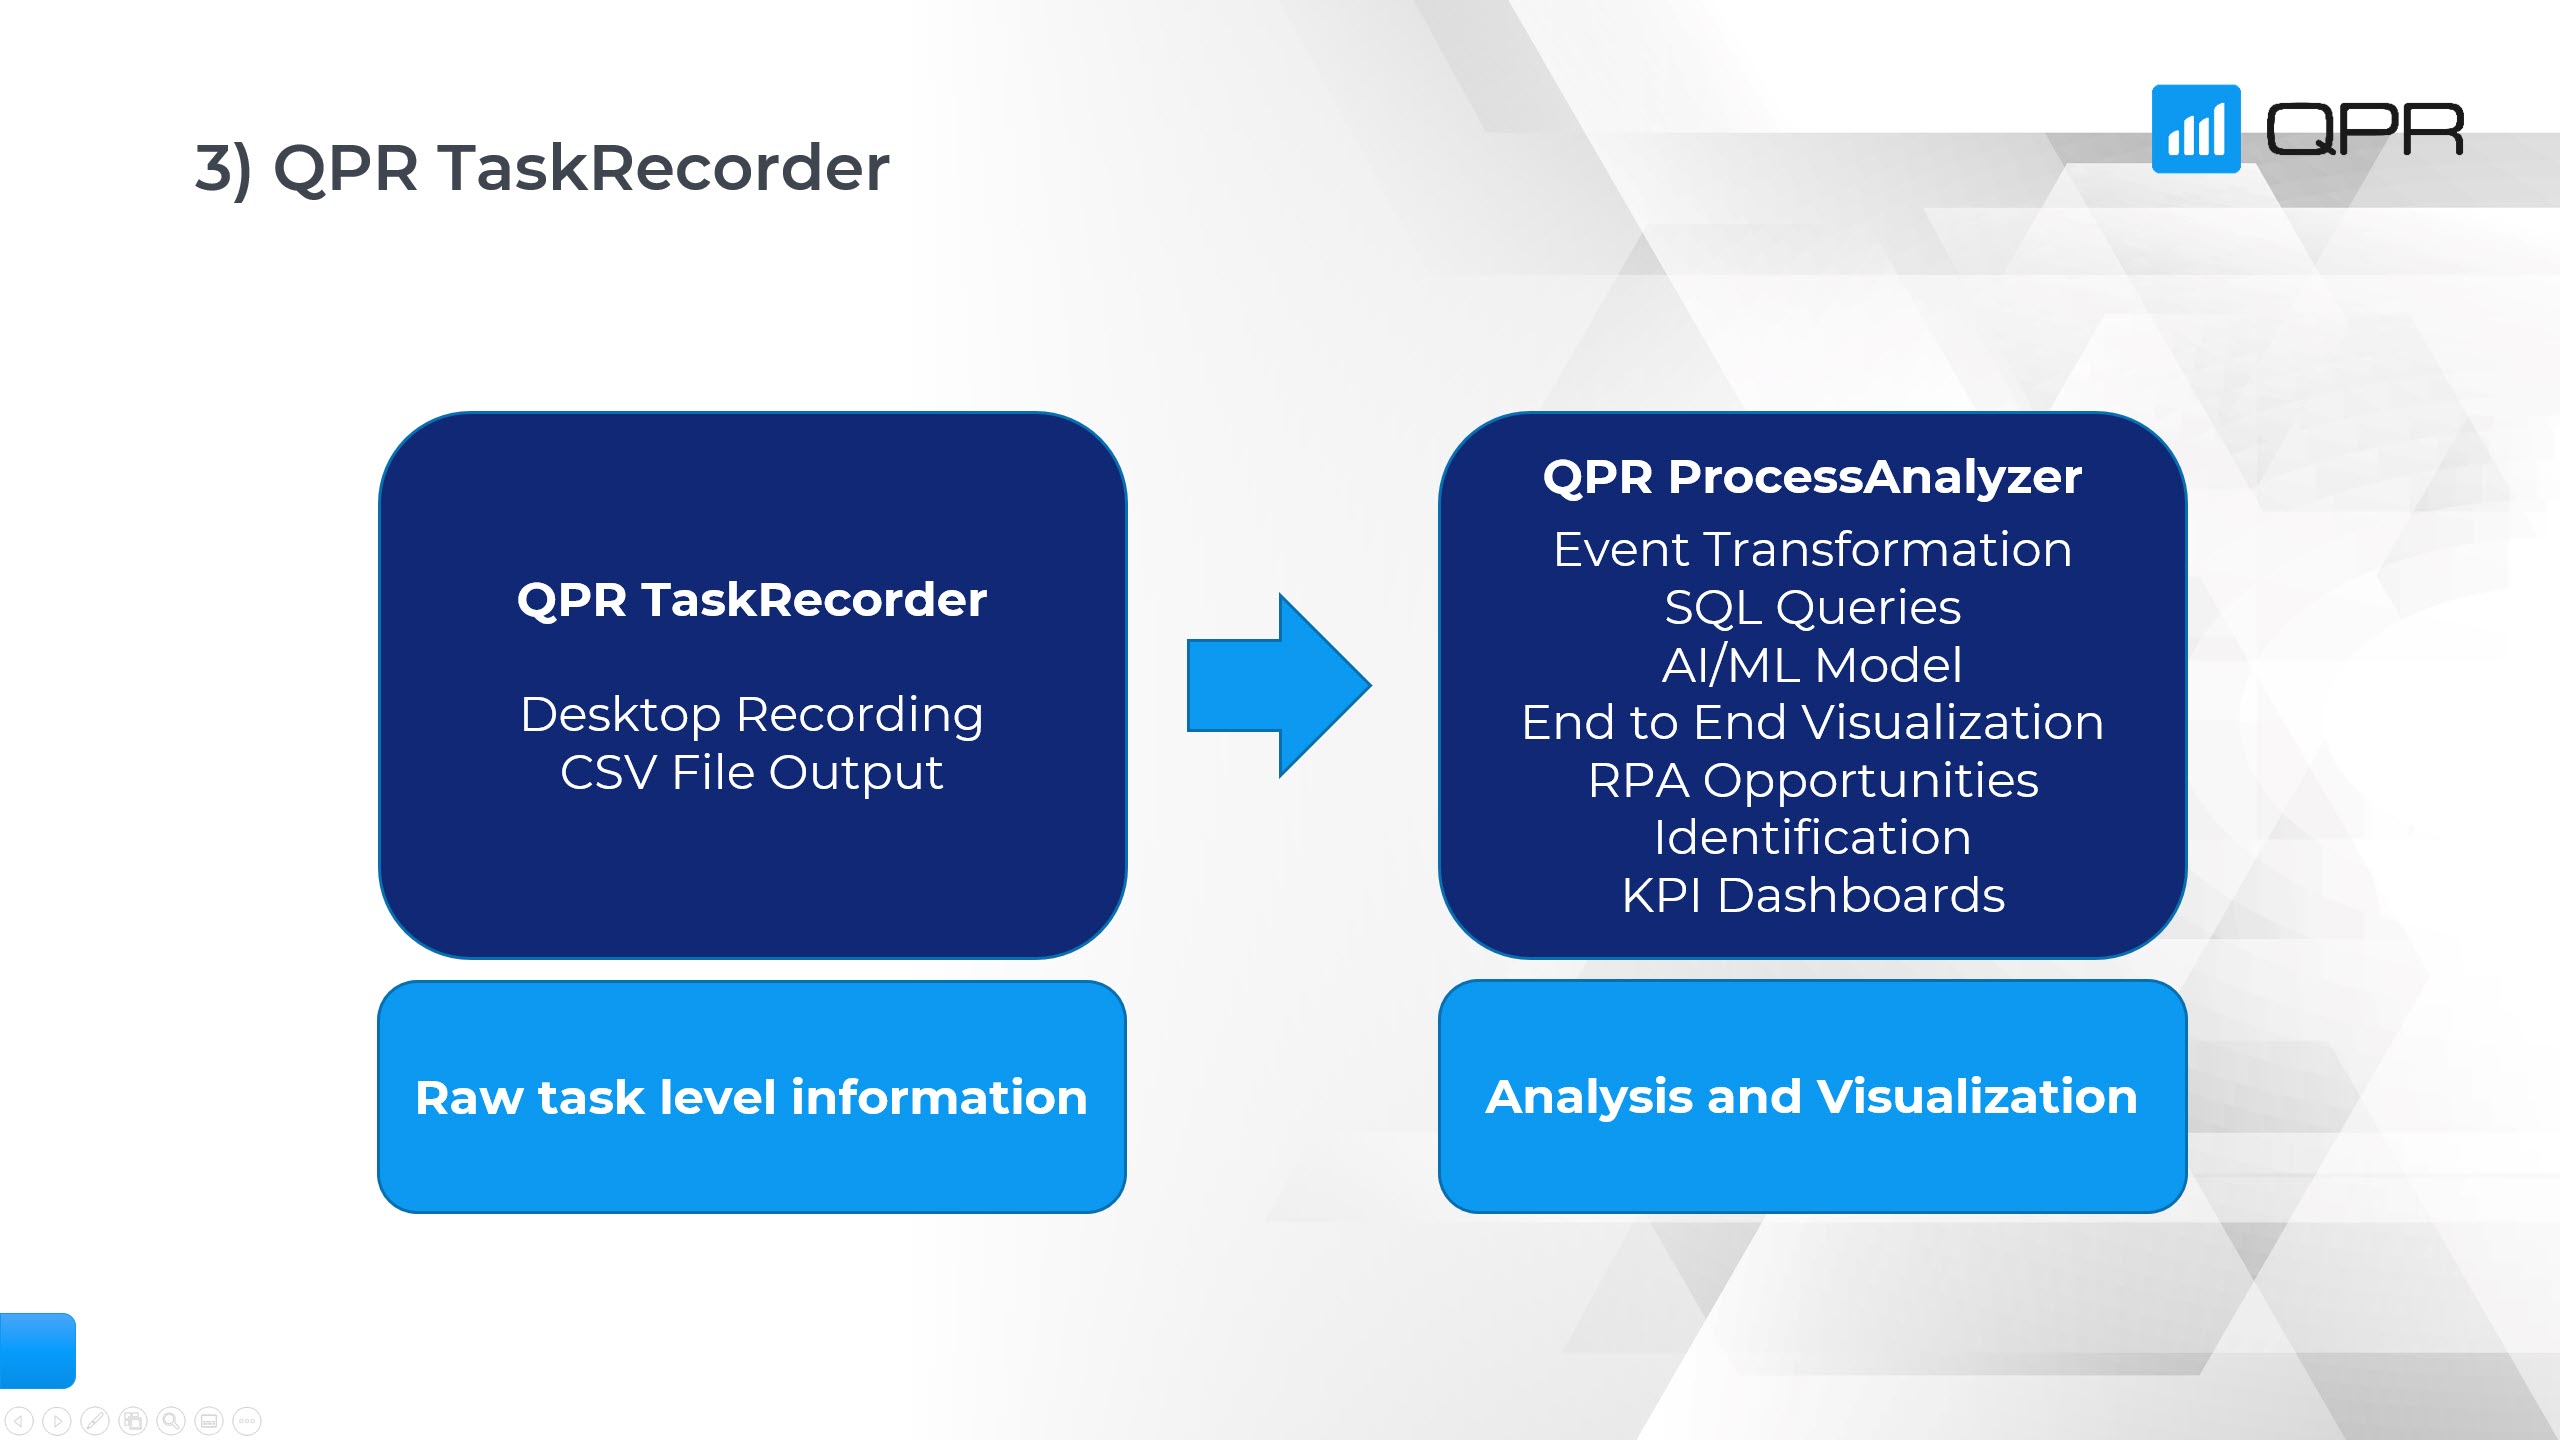 A screenshot of the connection between QPR TaskRecorder and QPR ProcessAnalyzer